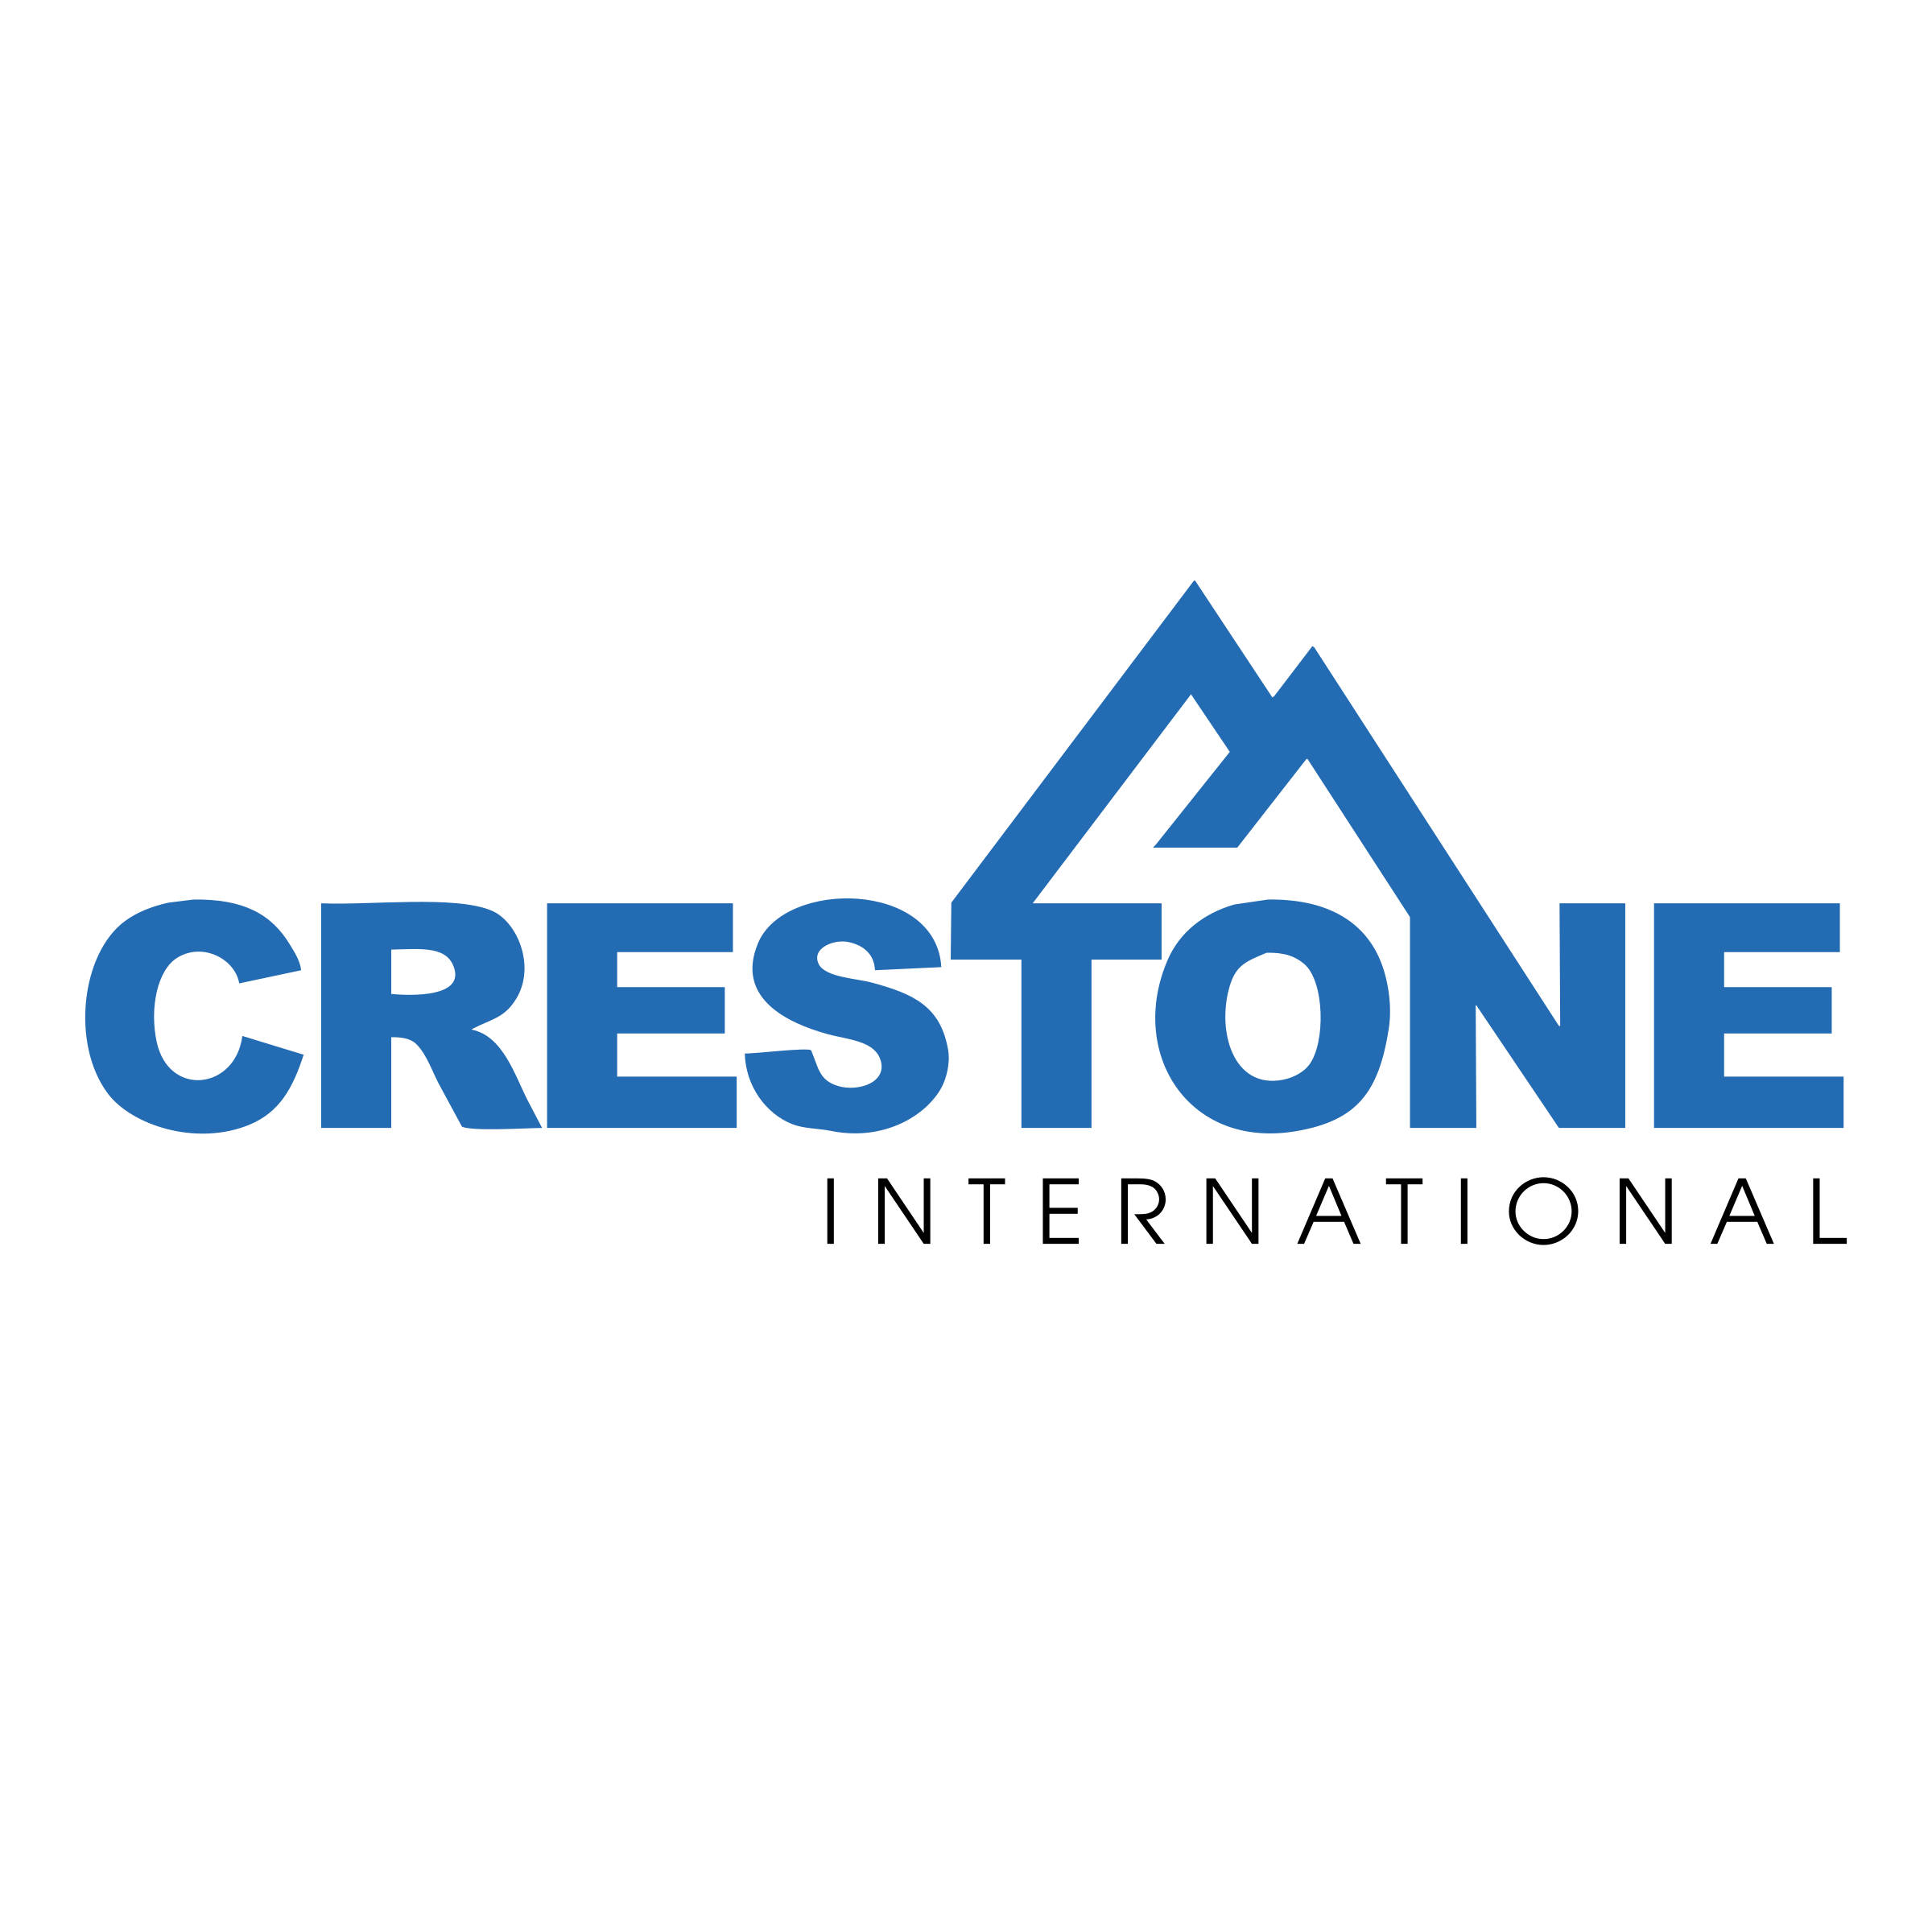 CyberCash Logo - Crestone International Logo PNG Transparent & SVG Vector